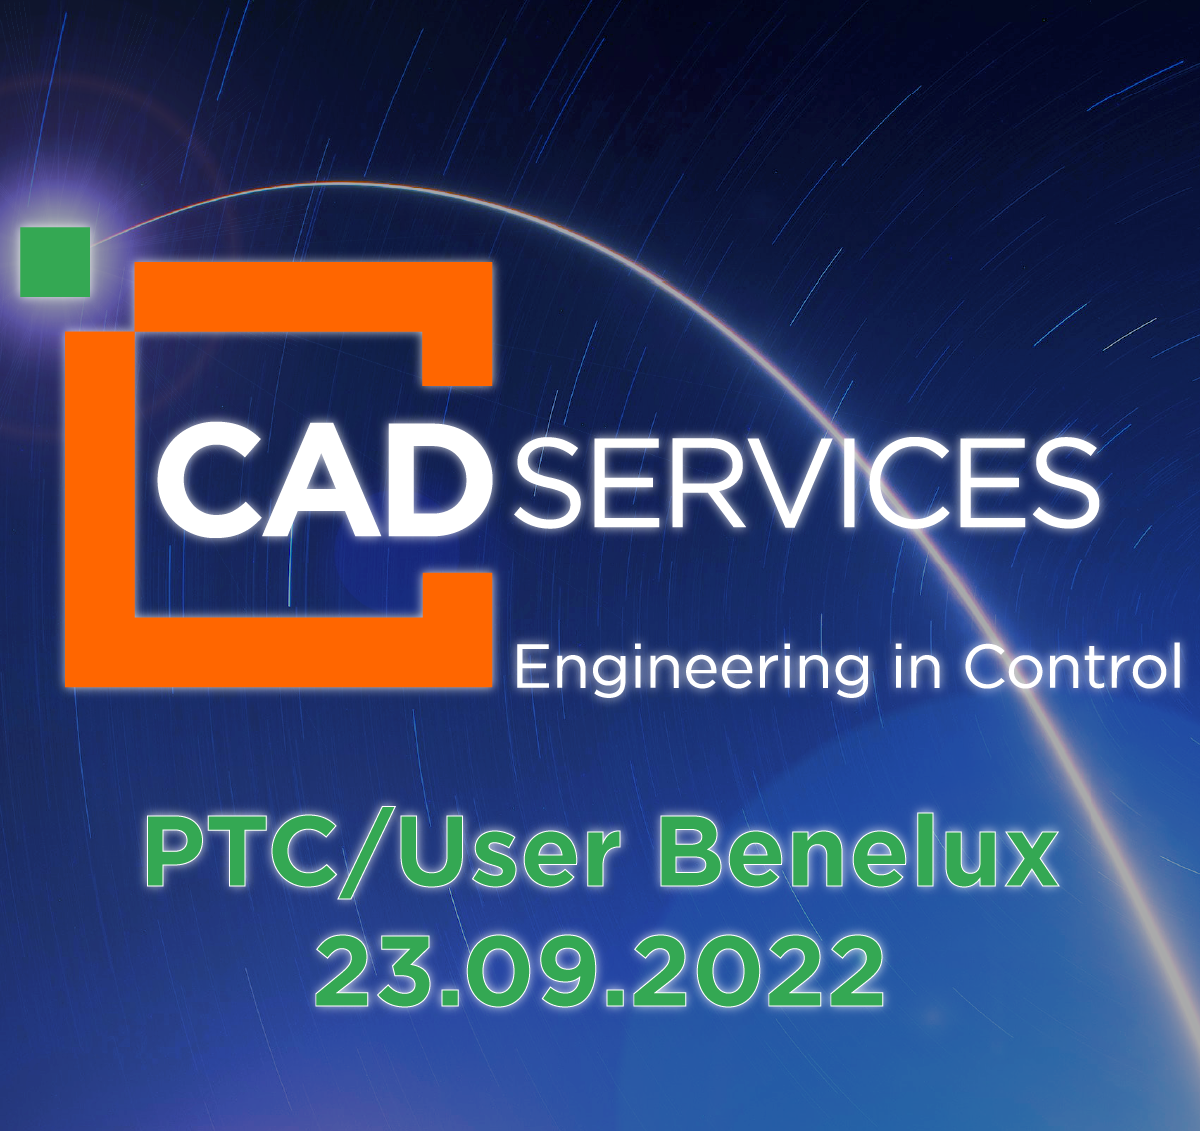 PTC/User Event Benelux 2022 CAD Services